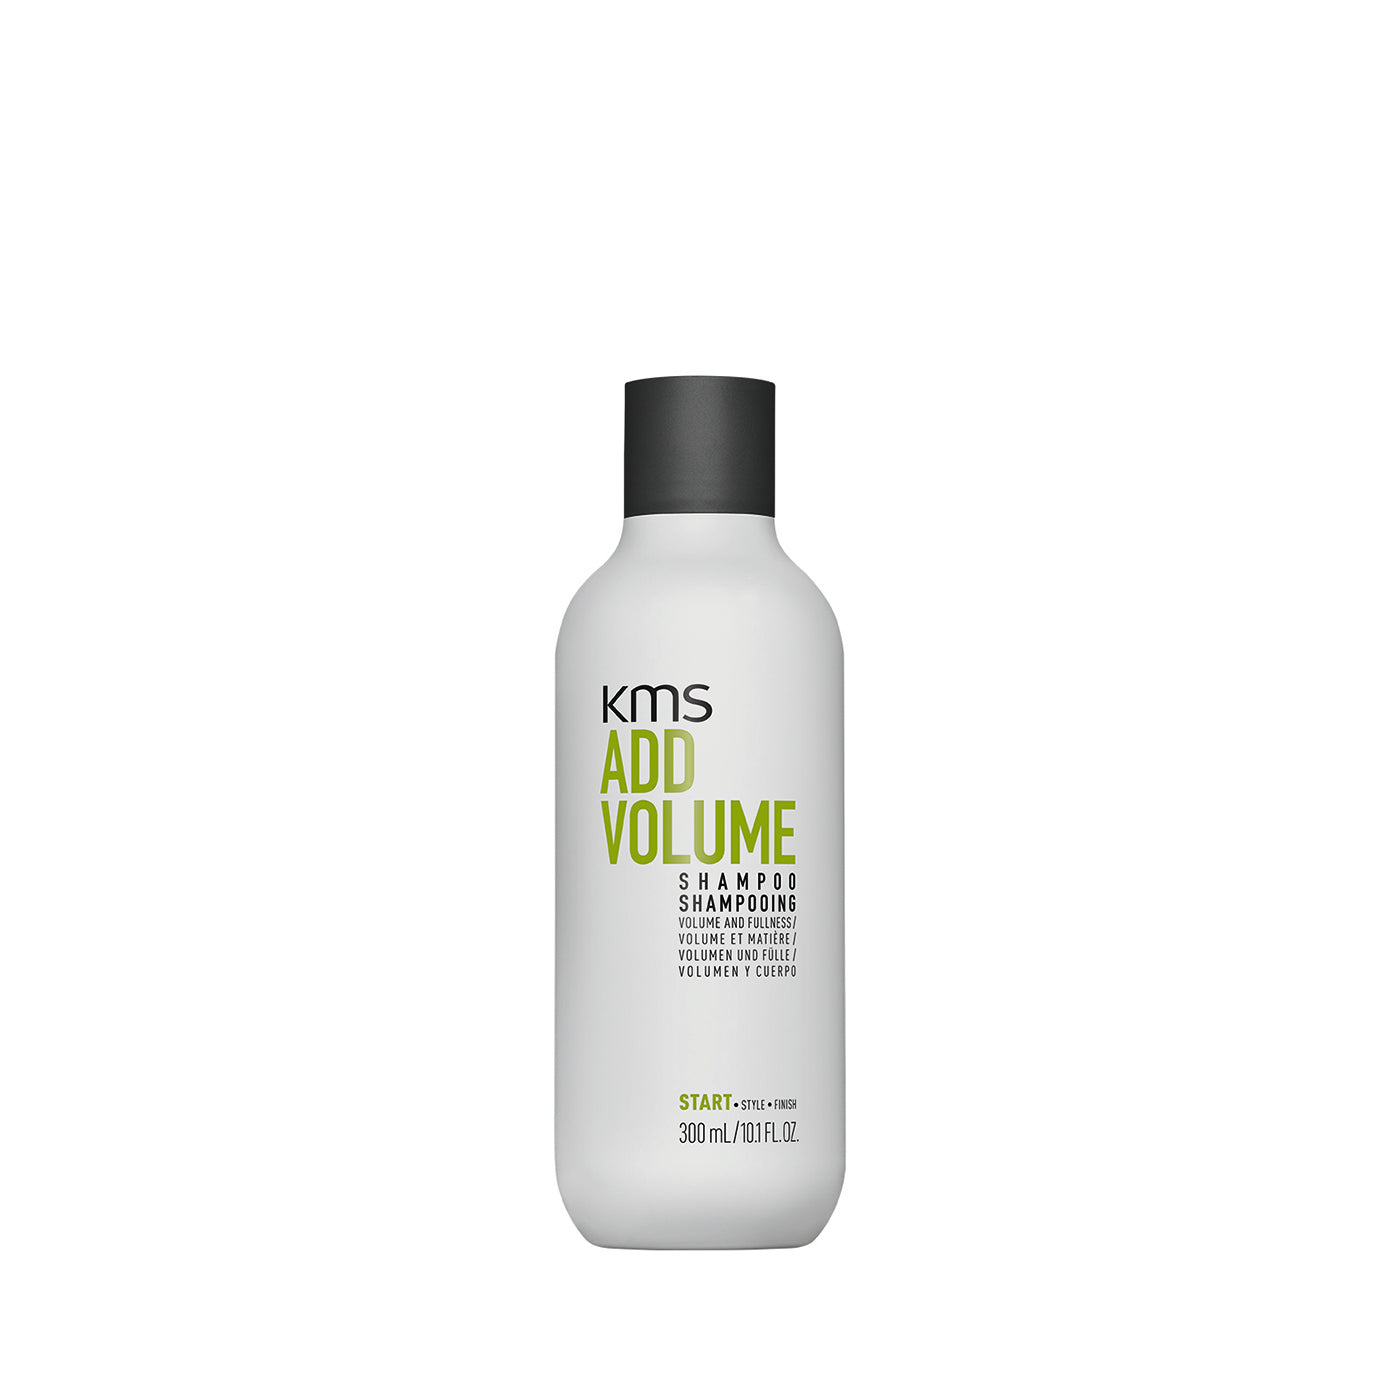 KMS Addvolume shampoo